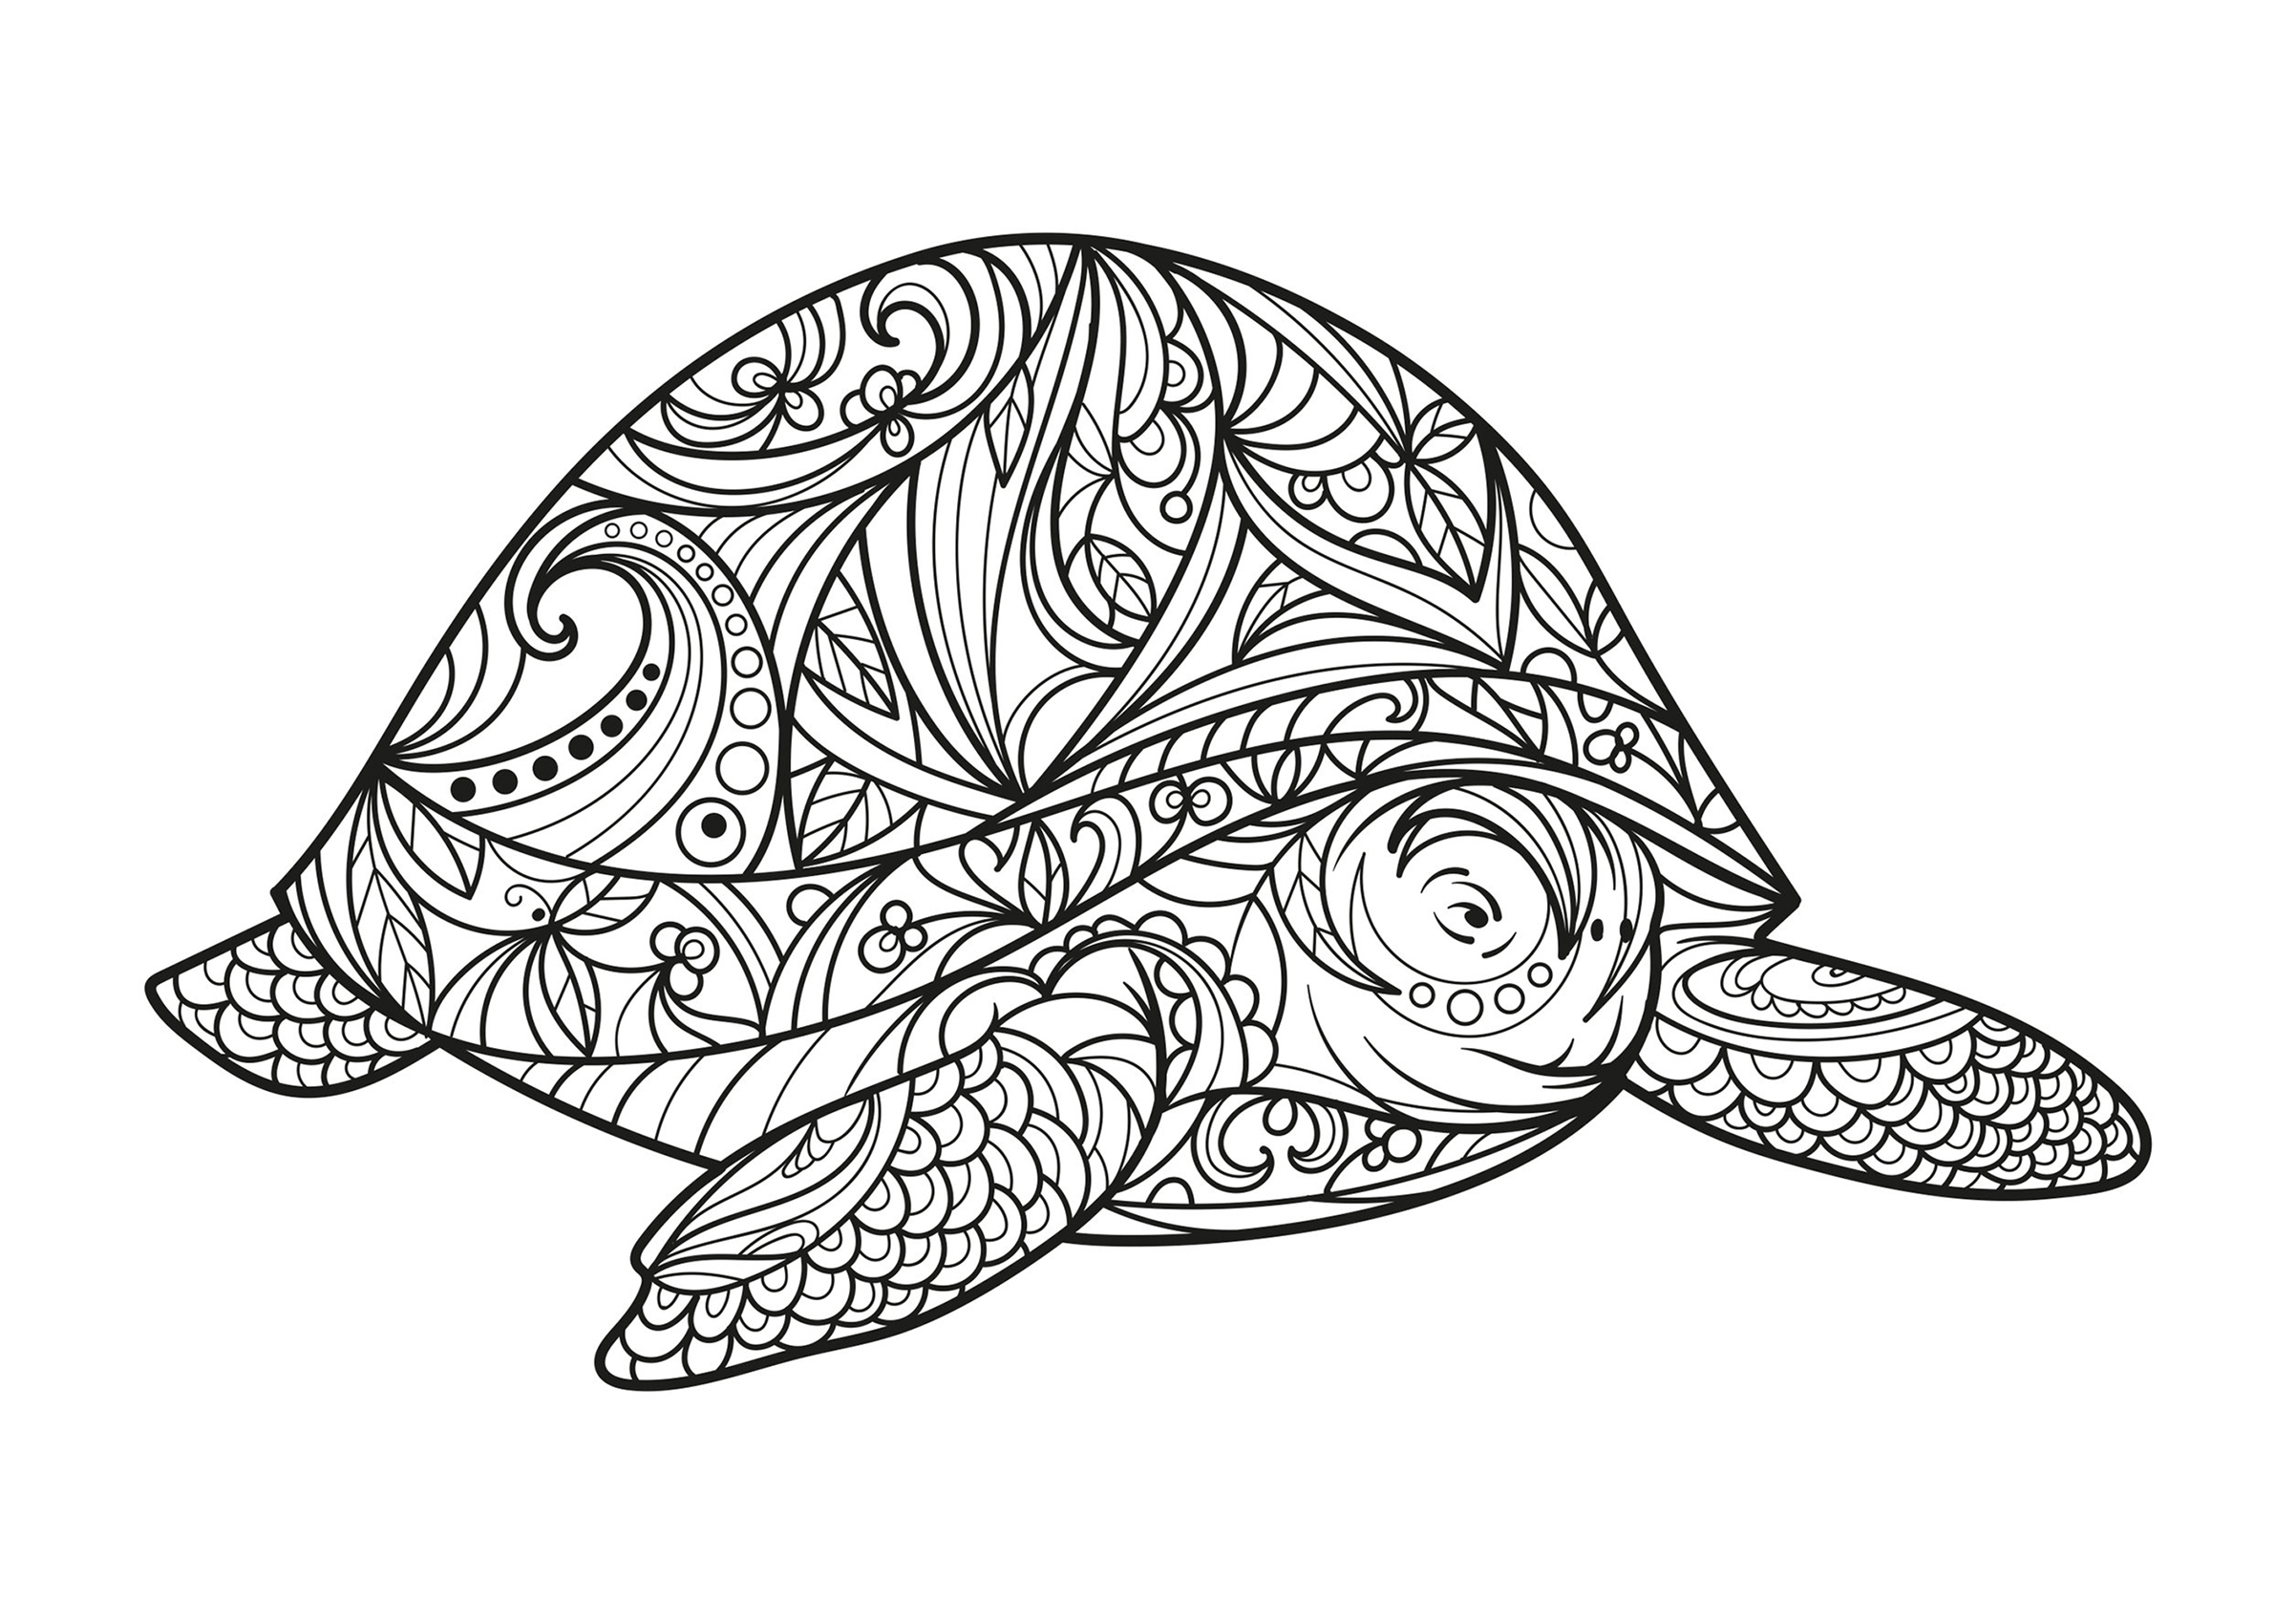 Grosse tortue avec des motifs Zentangle, Source : 123rf   Artiste : Alexpokusay